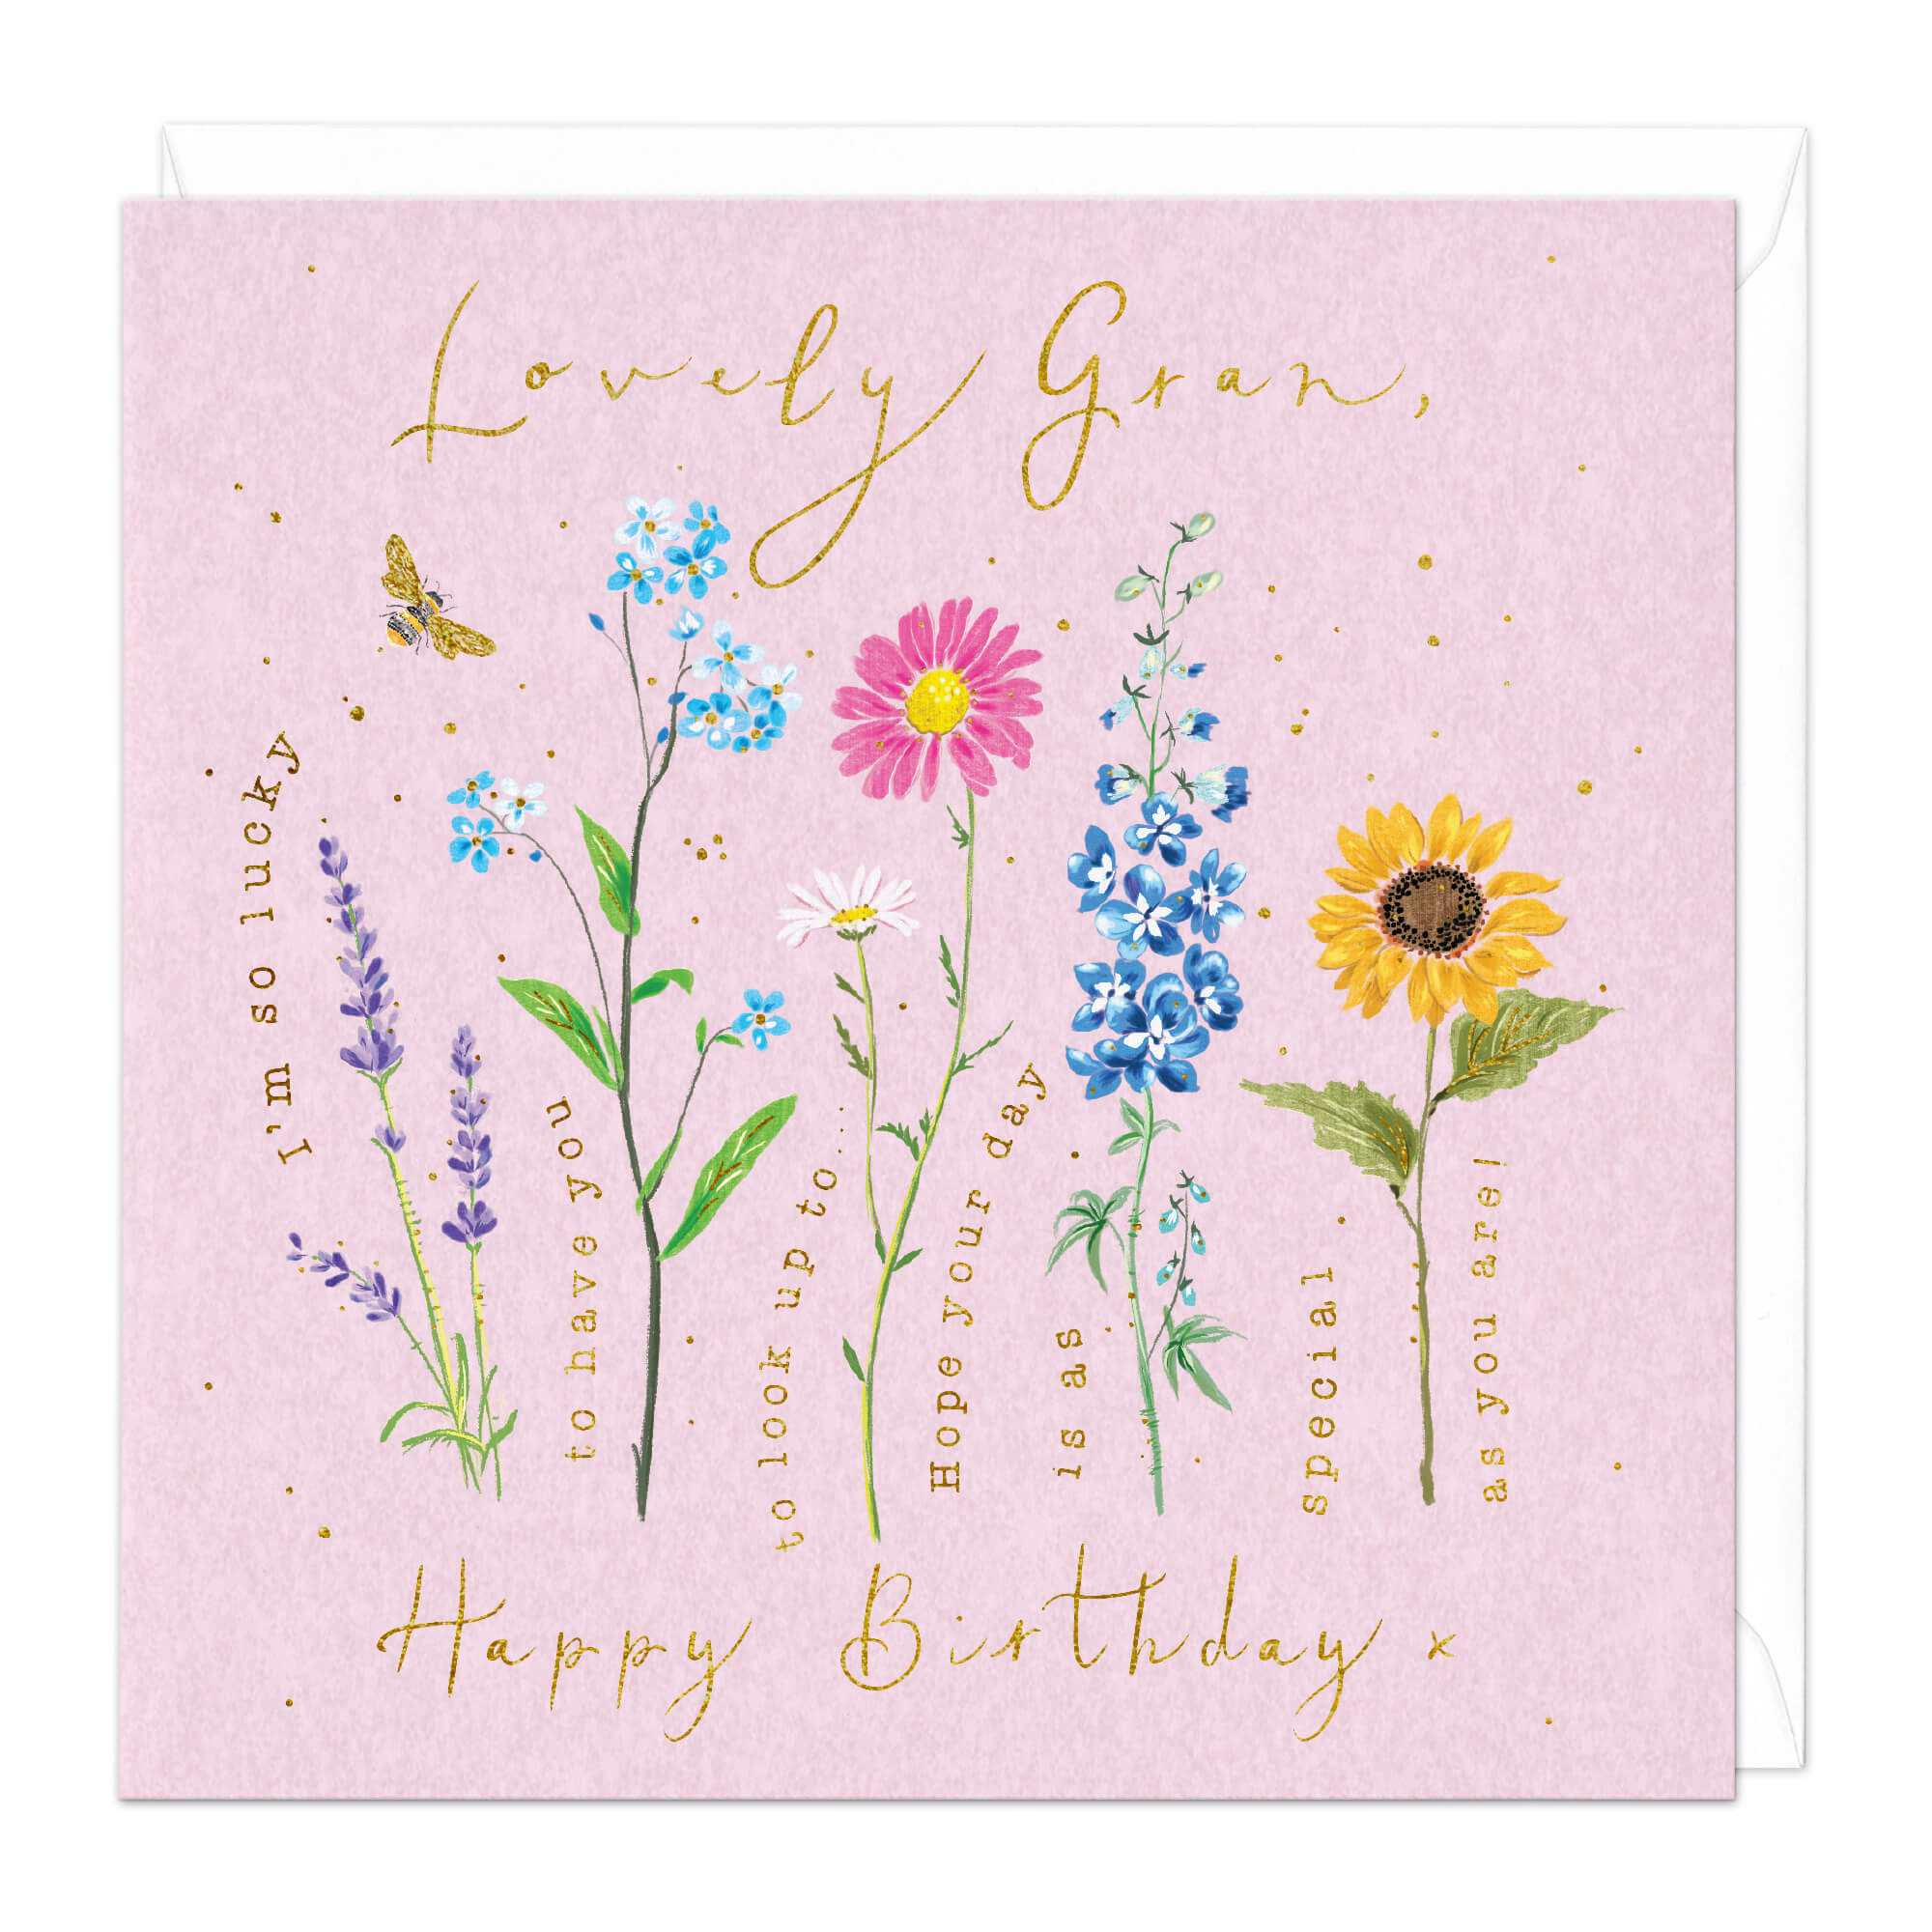 Lovely Gran Birthday Card